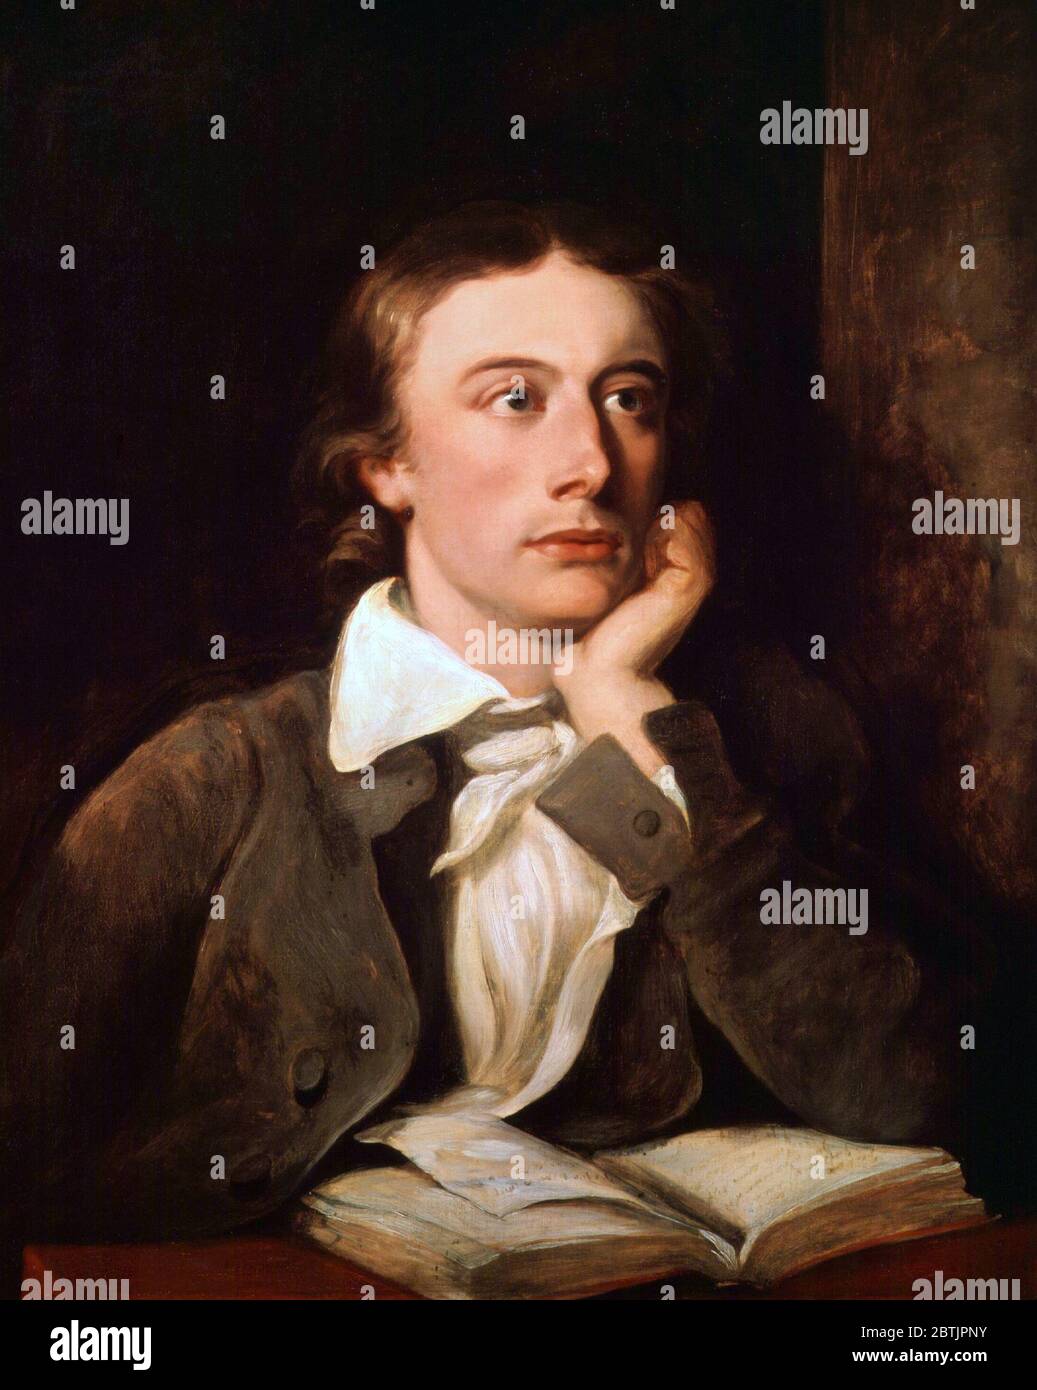 John Keats (1795-1821), portrait by William Hilton, oil on canvas, 1822. Stock Photo